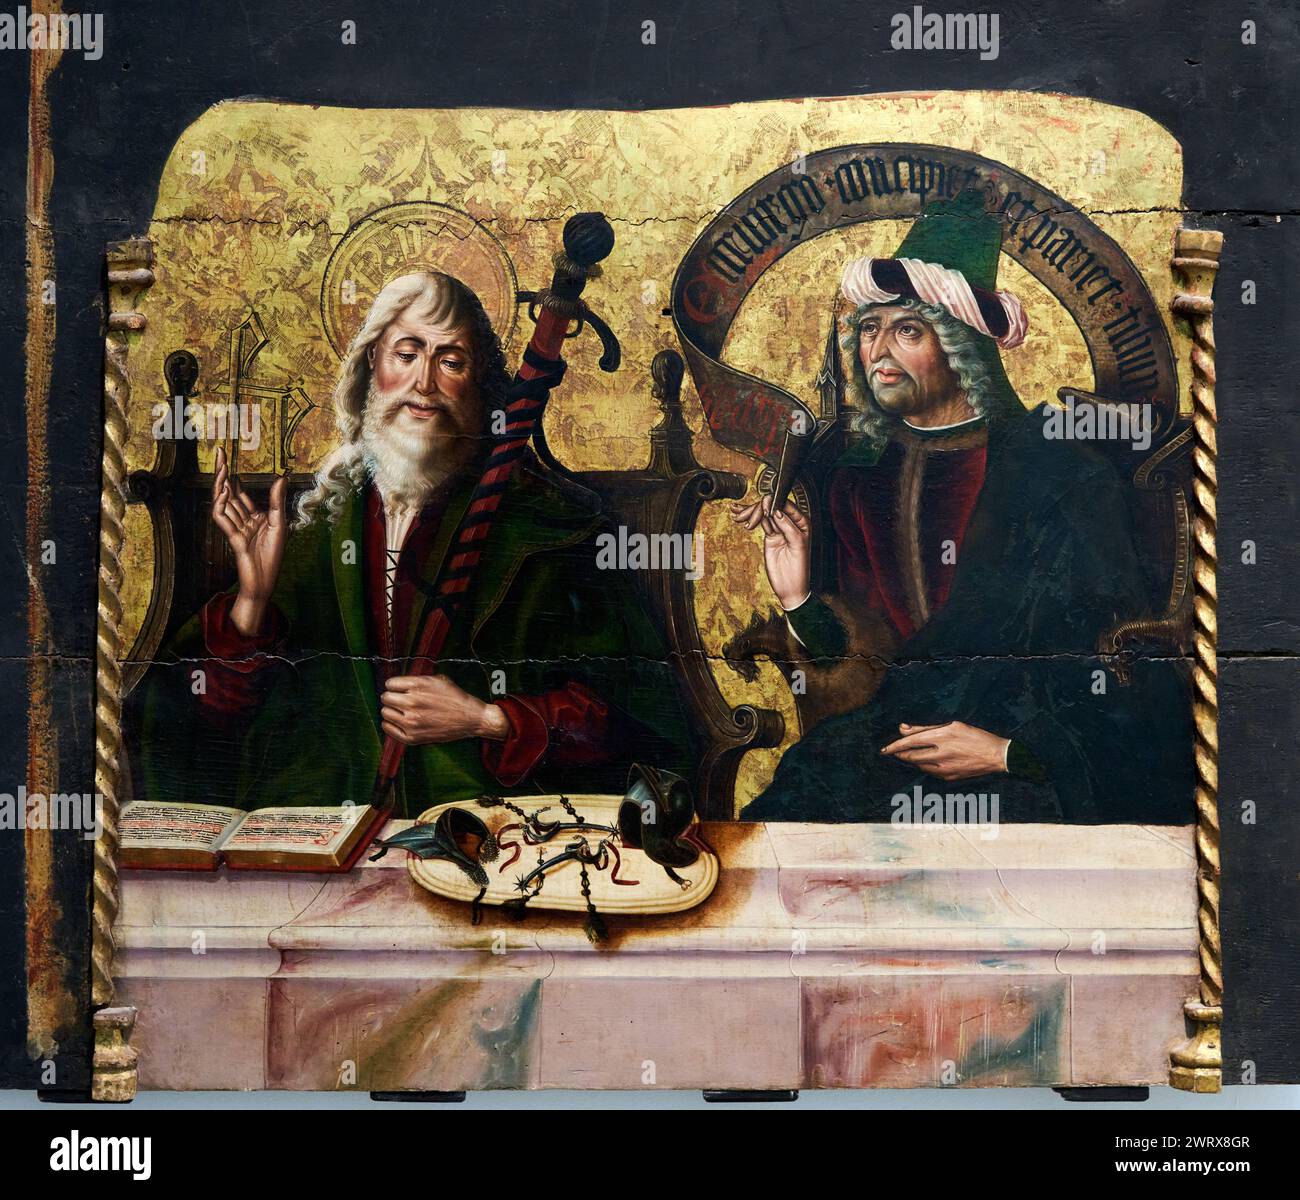 Maestro de Palanquinos, ¿ Pedro de Mayorga ?, active in León, c. 1470 - 1500, Saint Paul and Isaiah (table from the predella of the Santa Marina Altar Stock Photo